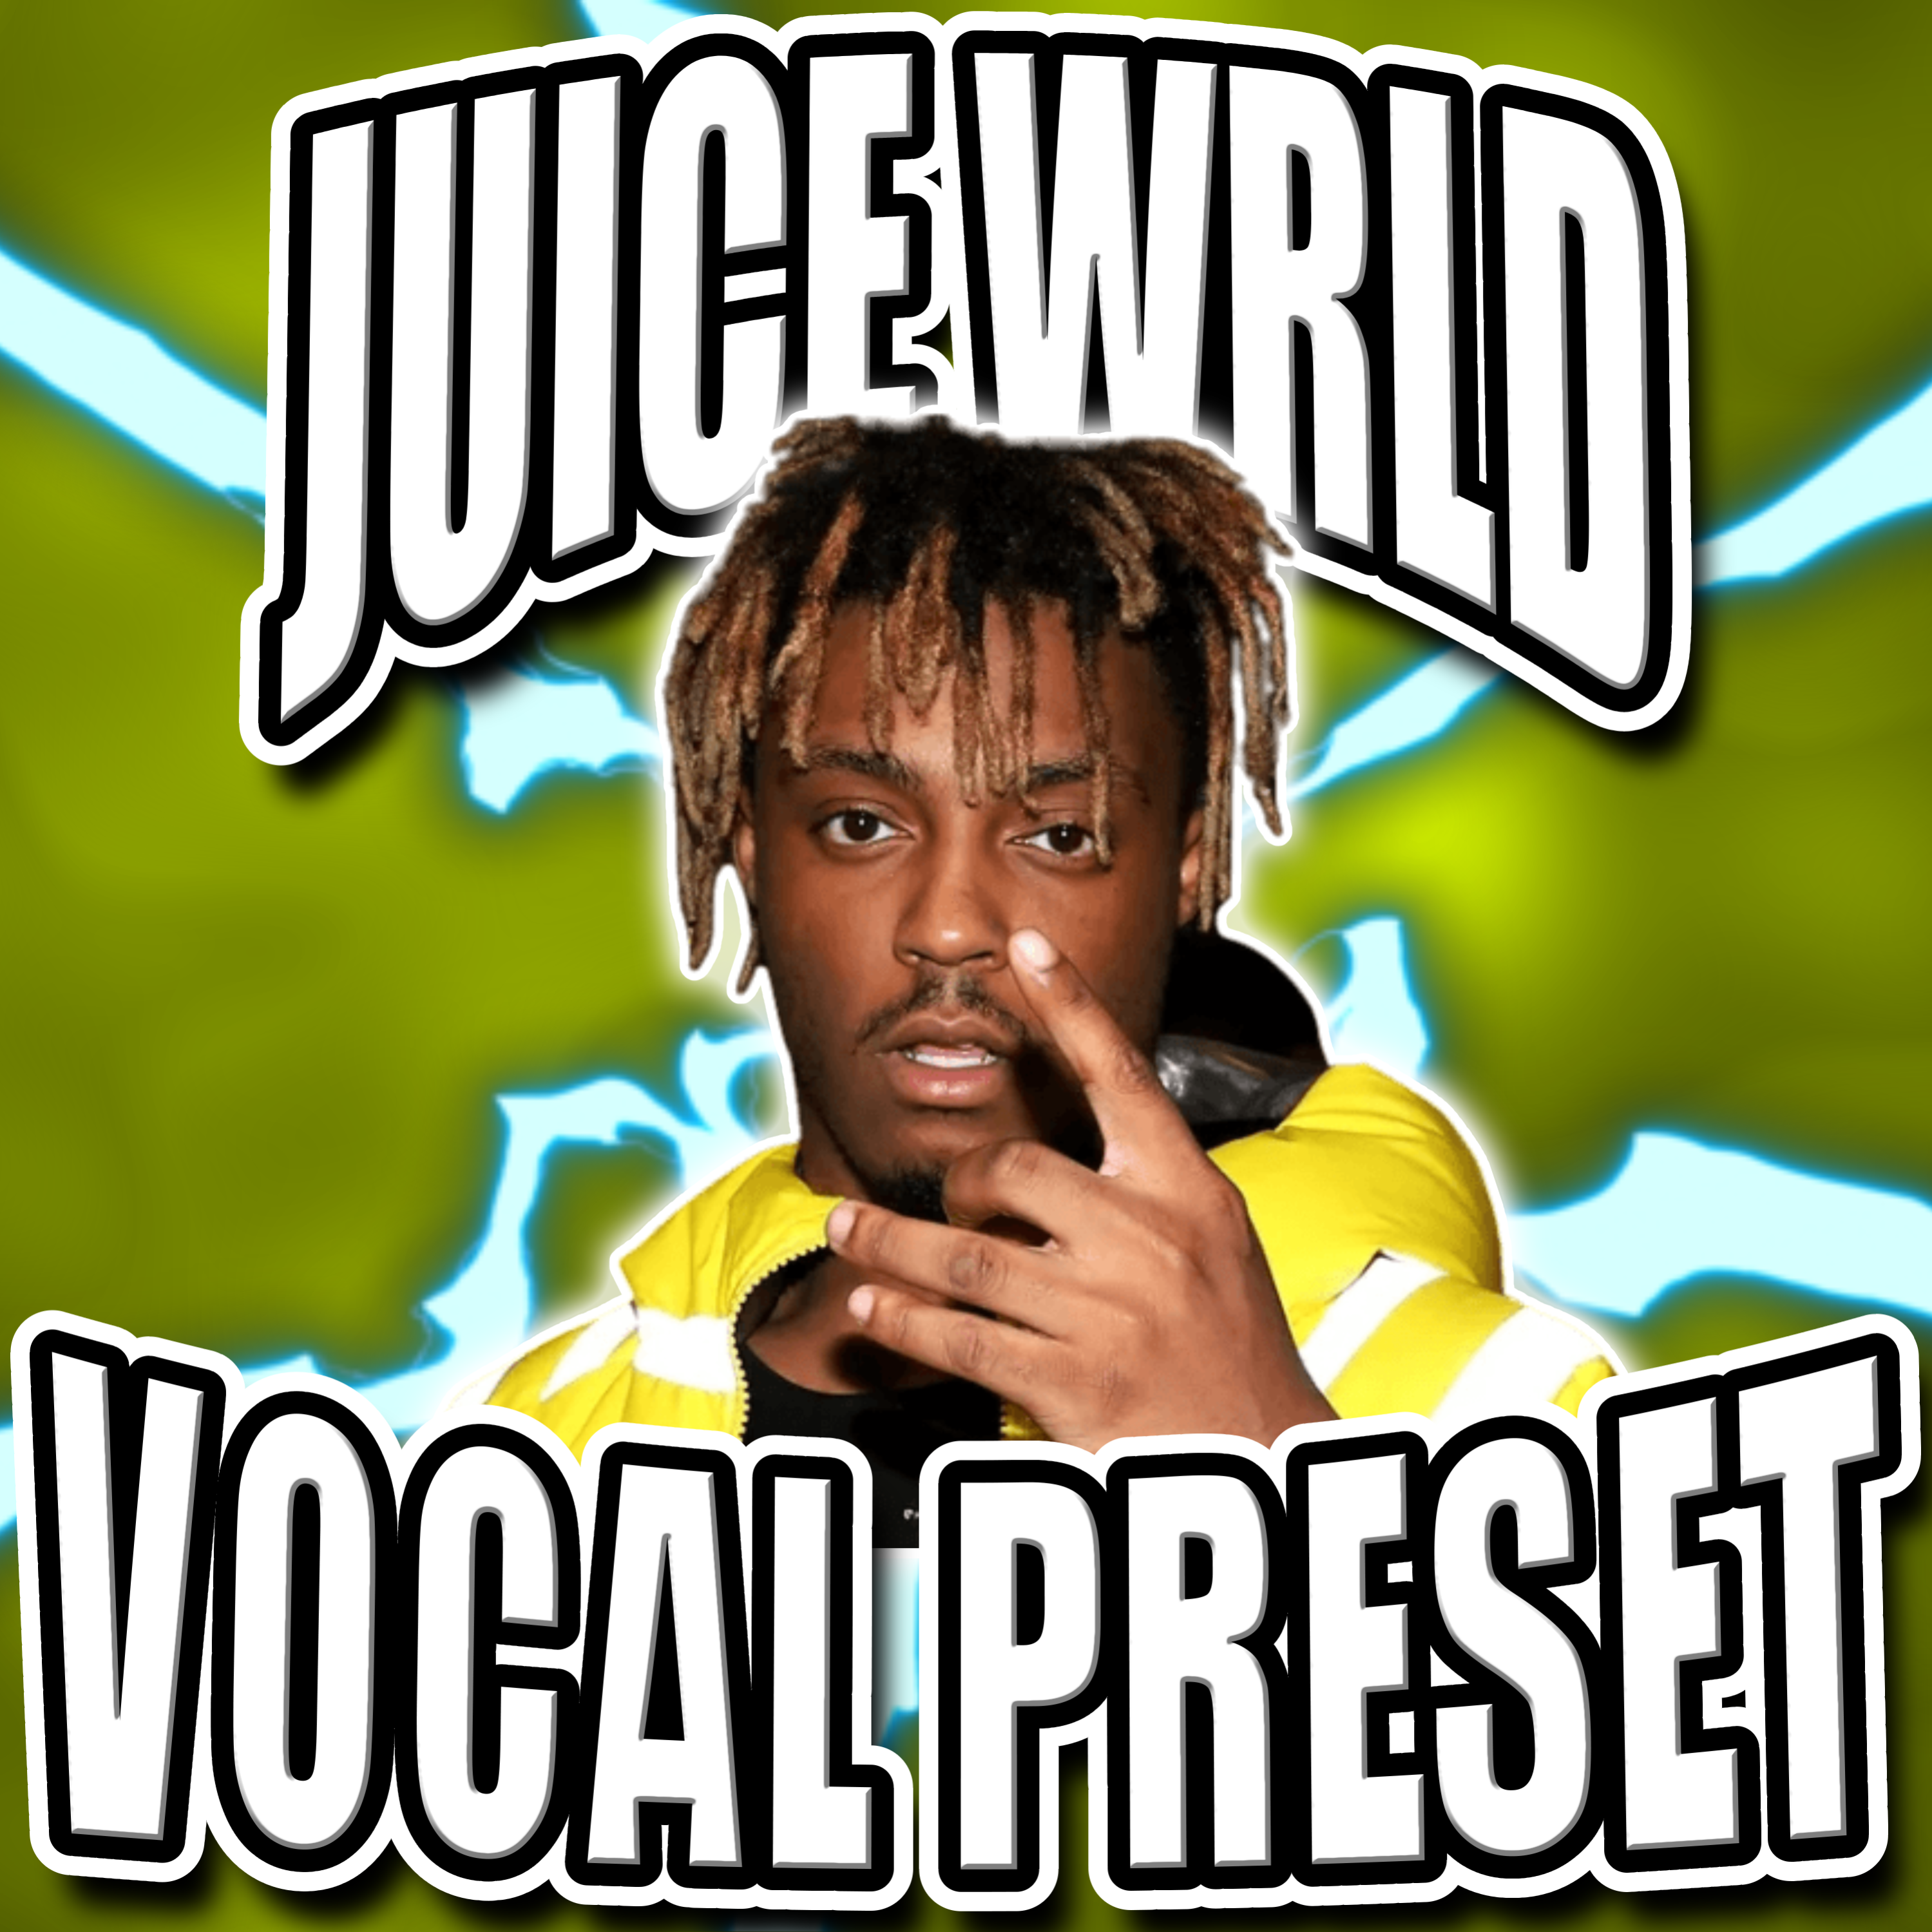 The JuiceWrld Vocal Preset